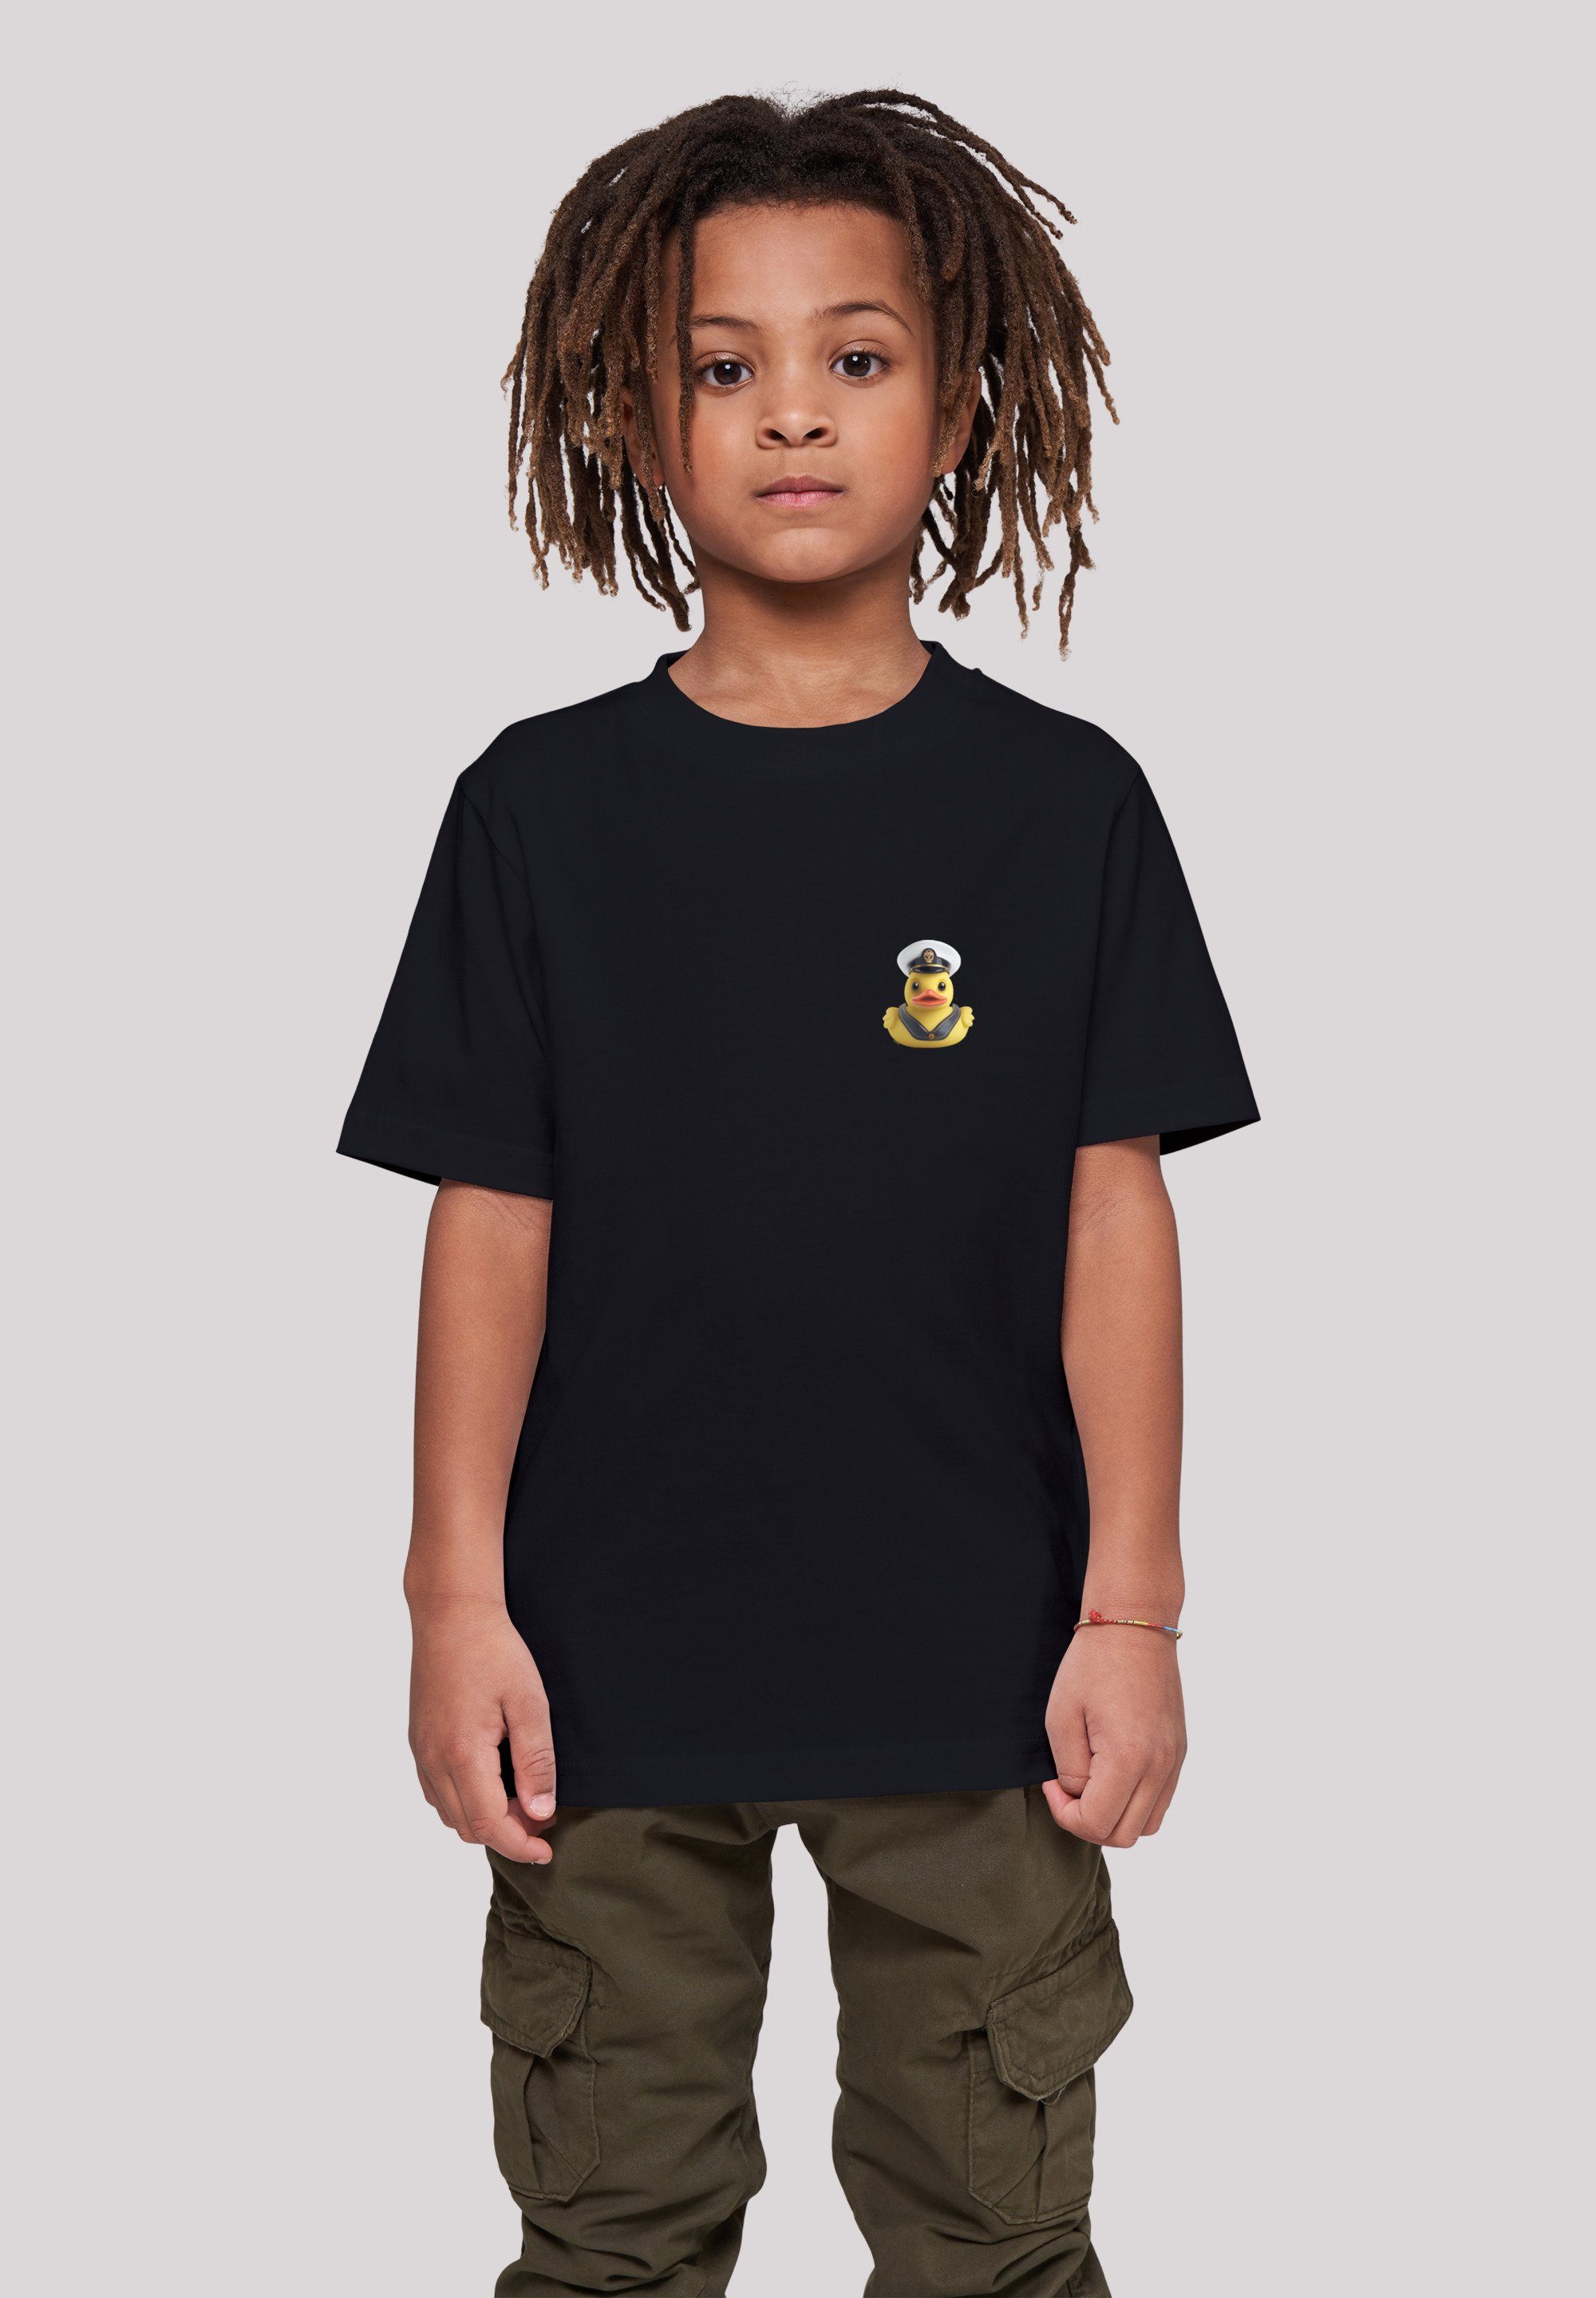 F4NT4STIC T-Shirt Rubber Duck Captain UNISEX Print schwarz TEE